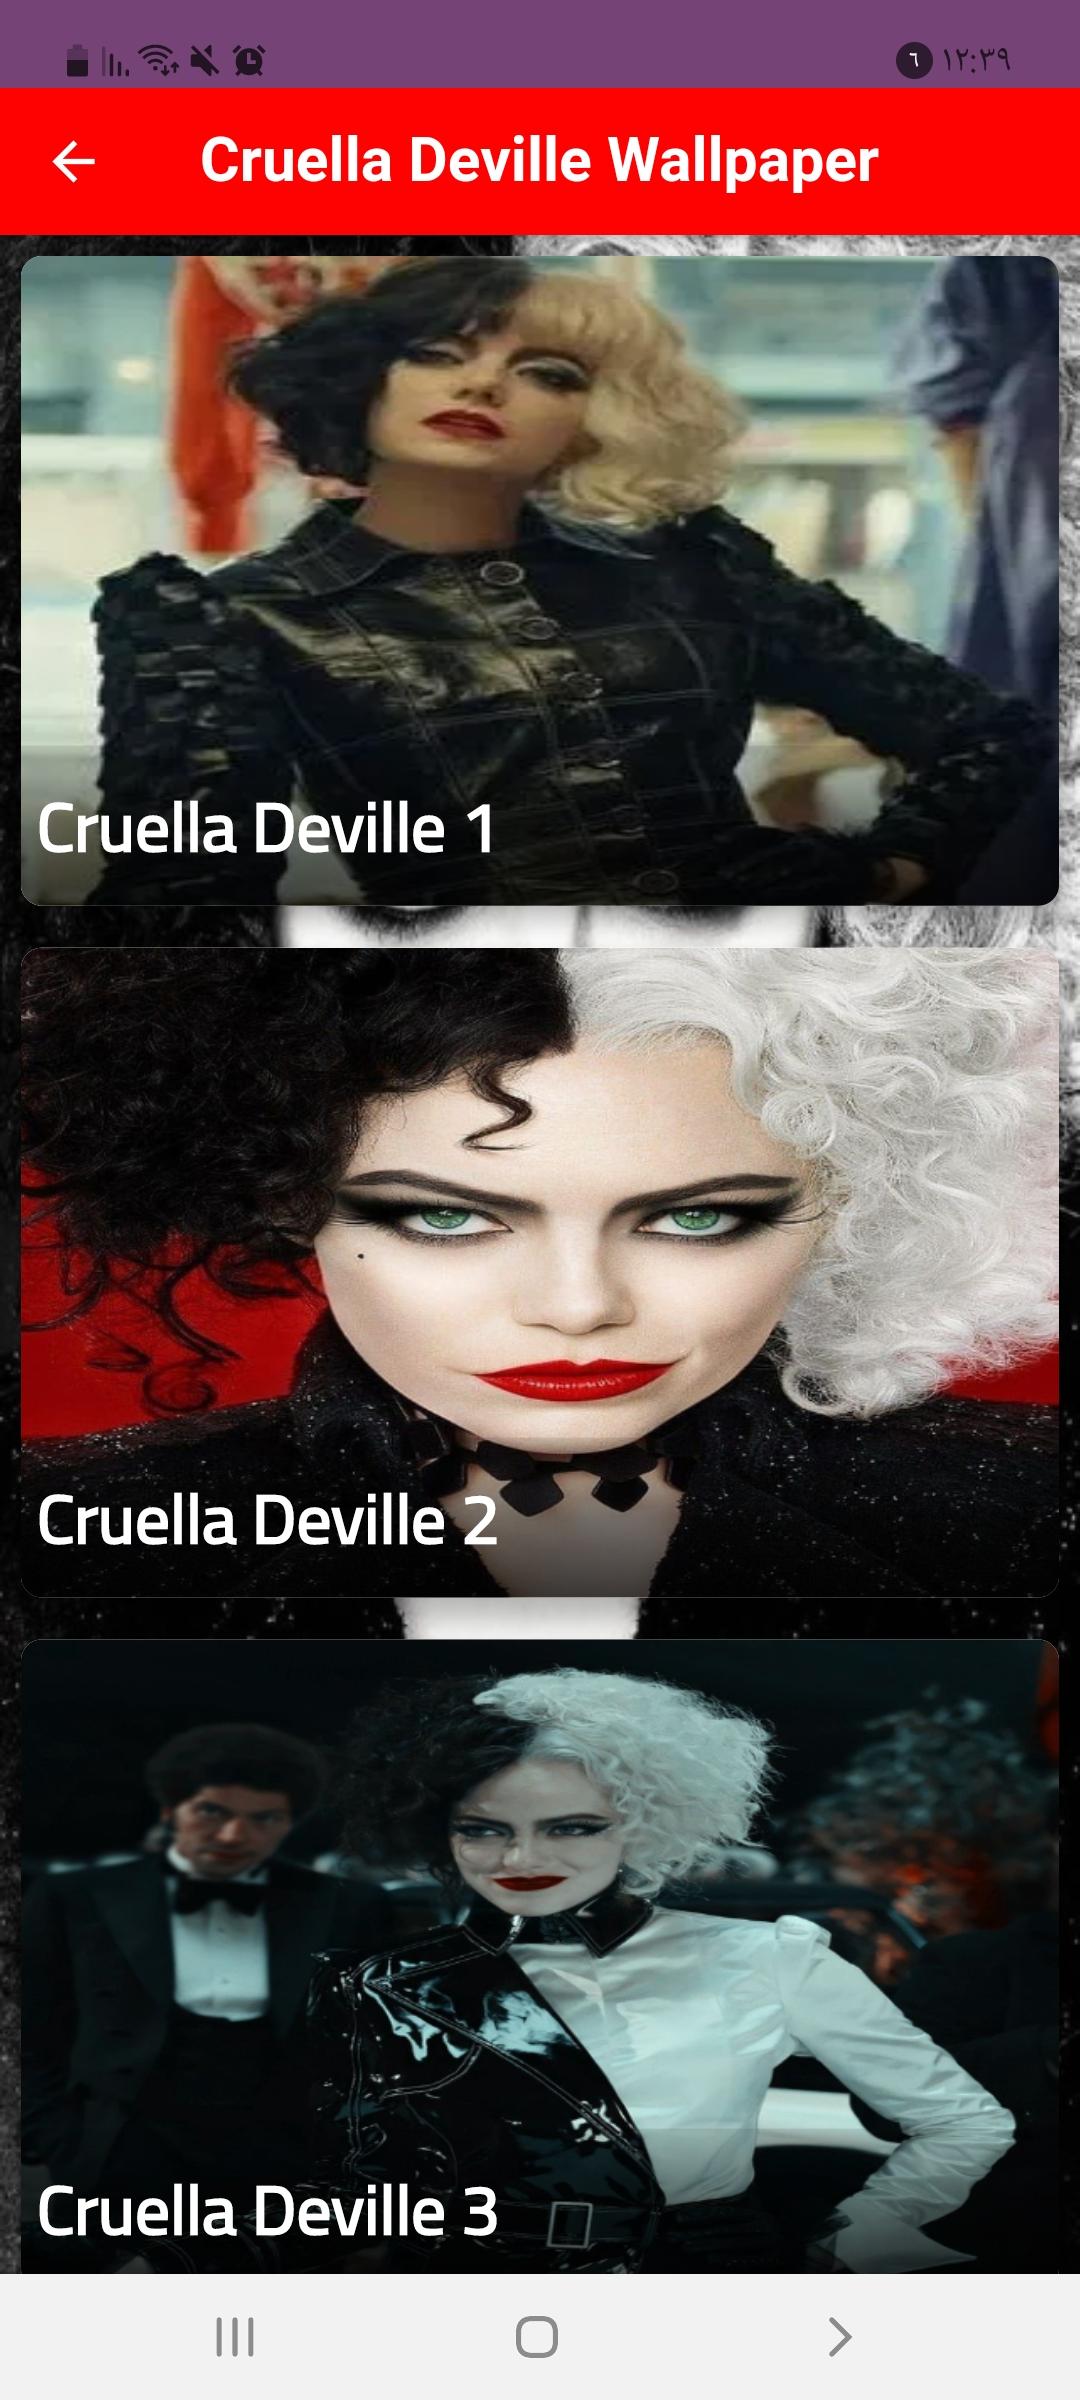 Cruella Deville Wallpaper 3 Screenshot 9